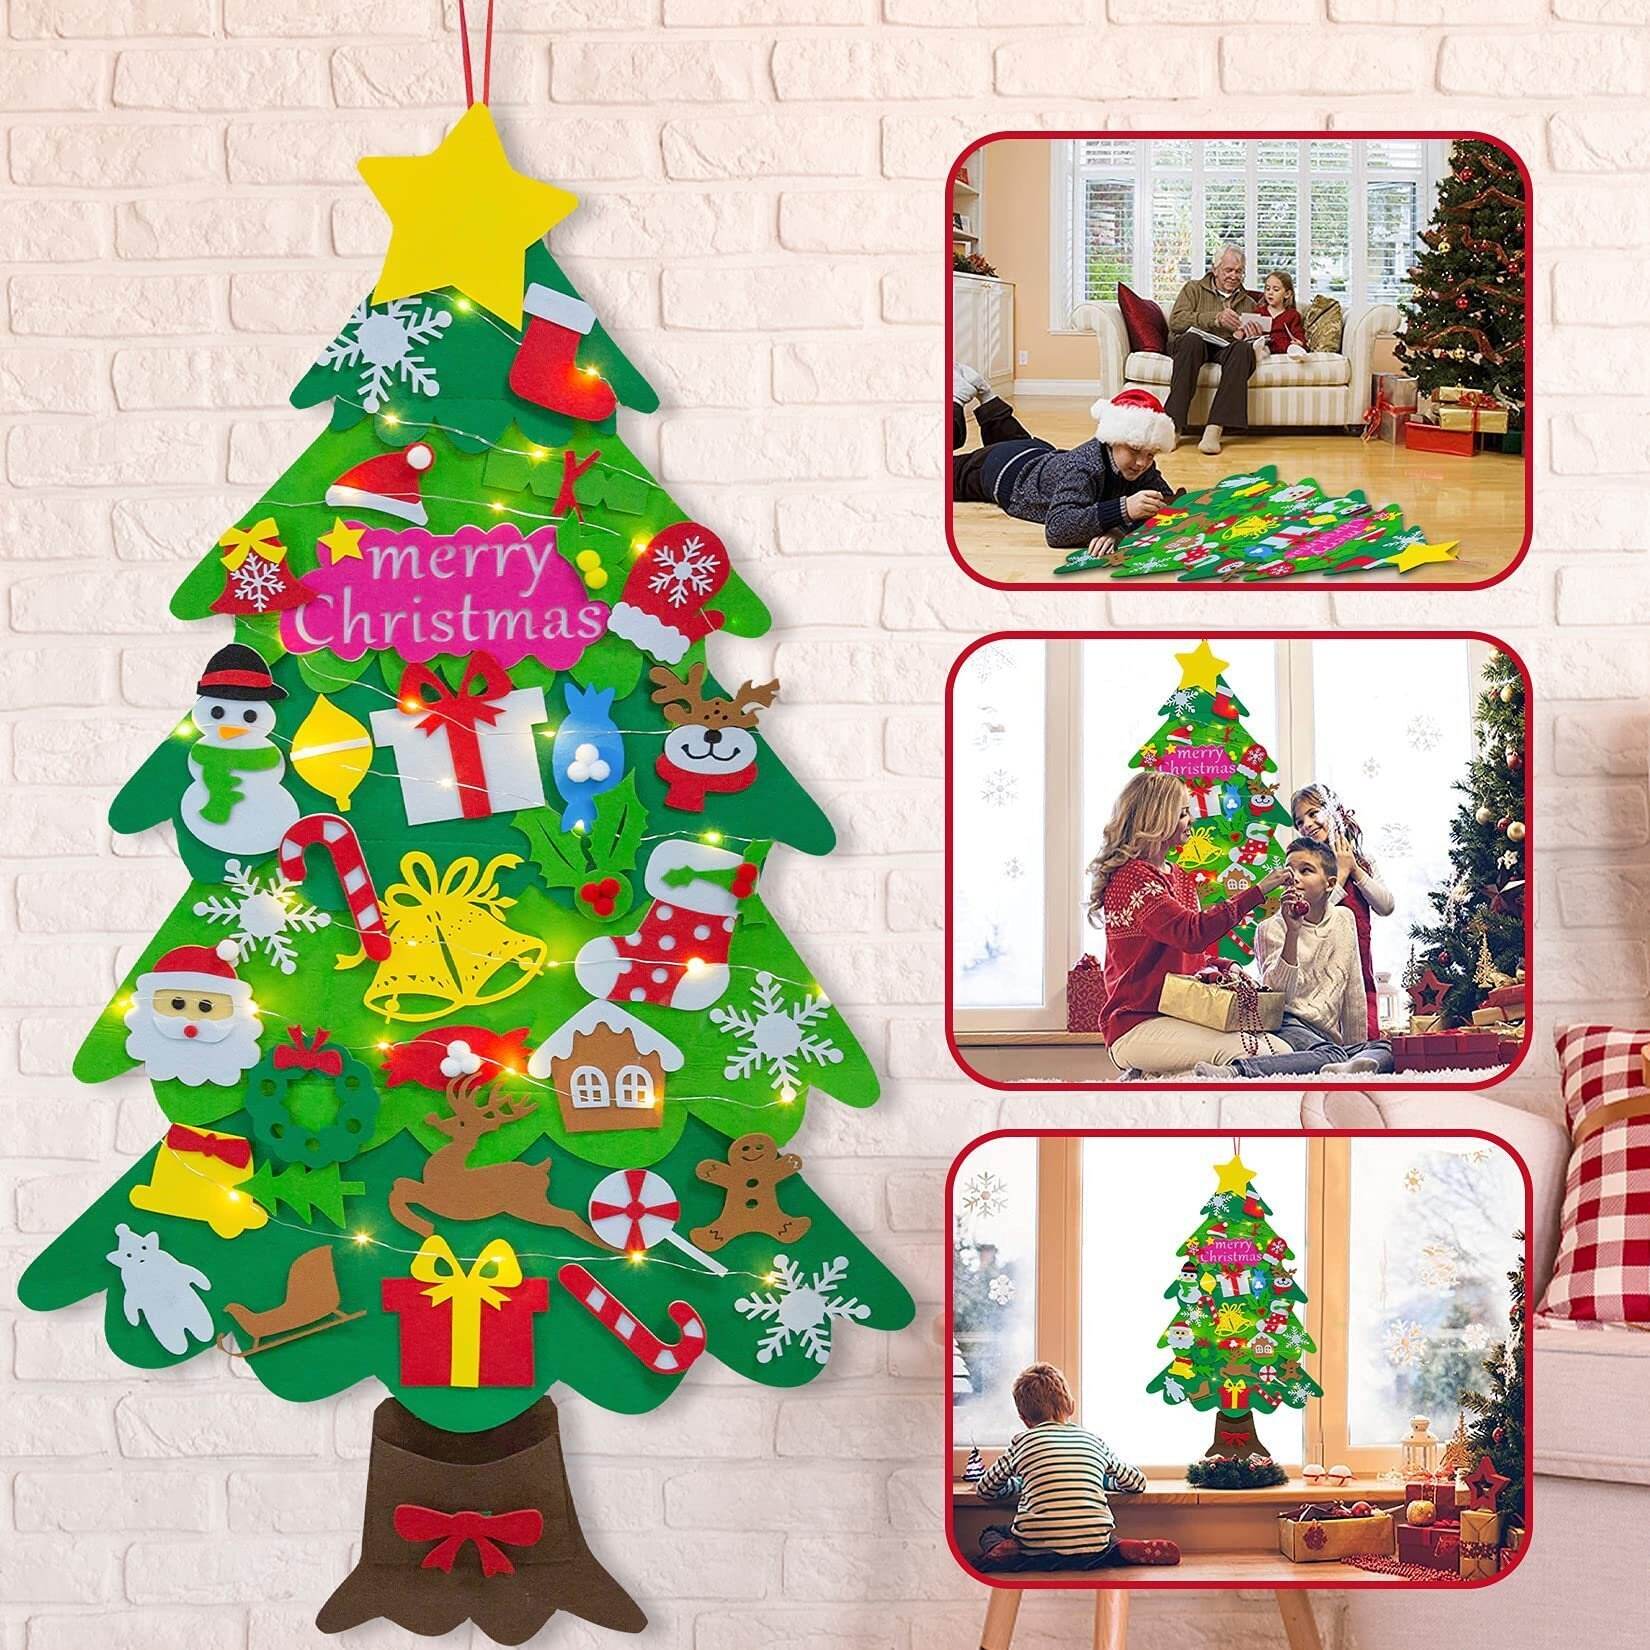 ??Felt Christmas Tree Set With 32PCS Ornaments Wall Hanging Tree & 35LED String Lights